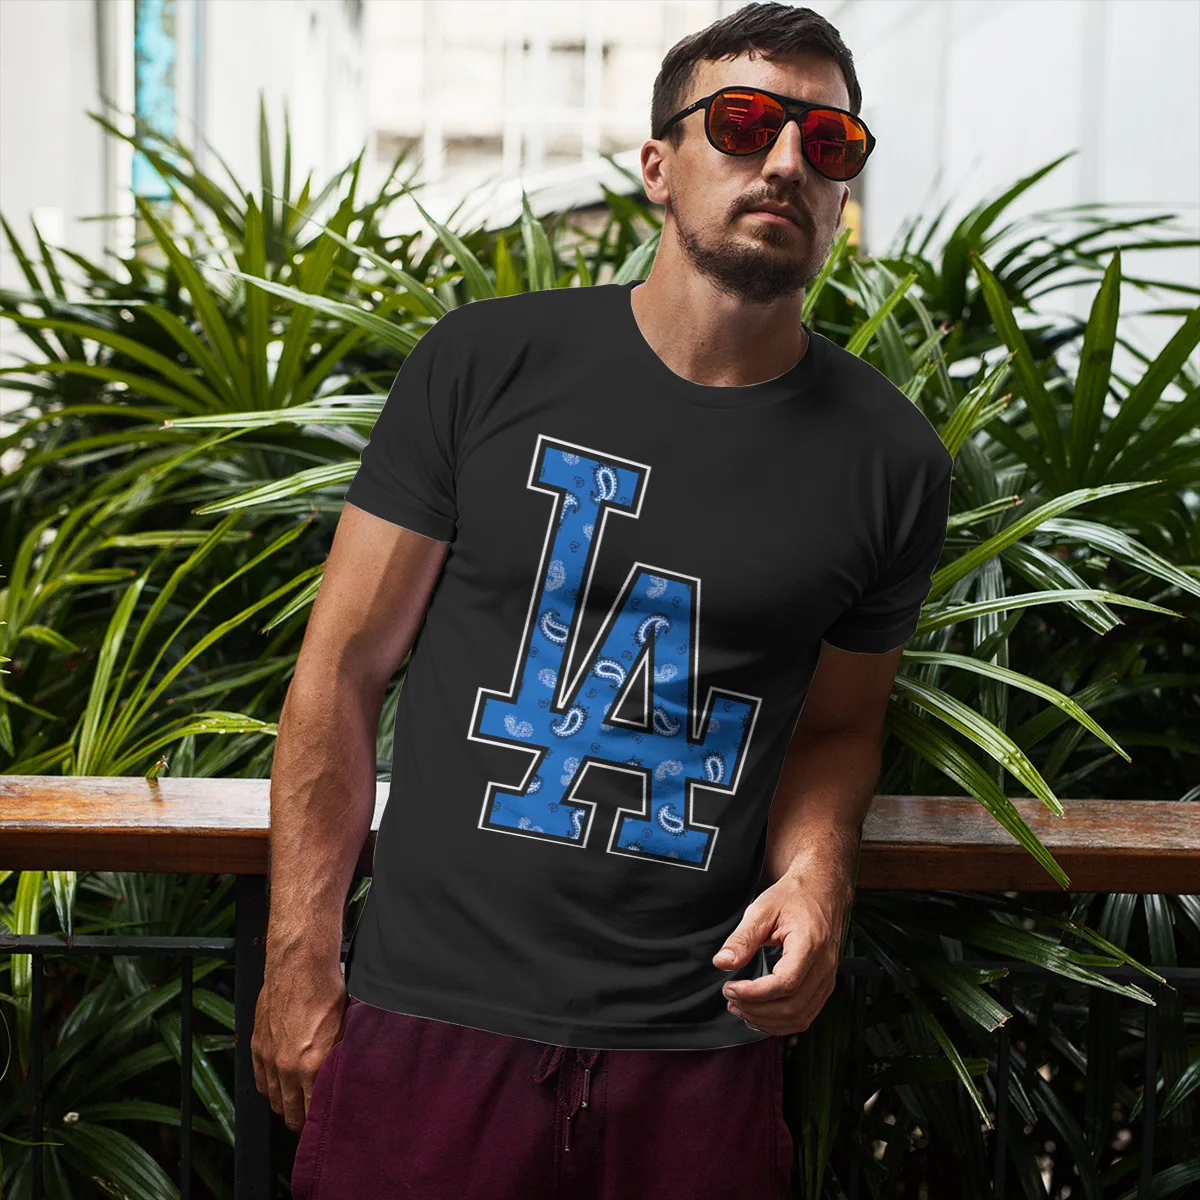 

LAD Bandana Crips Men's short-sleeved t-shirt Funny Graphic R346 T-shirts Eur Size